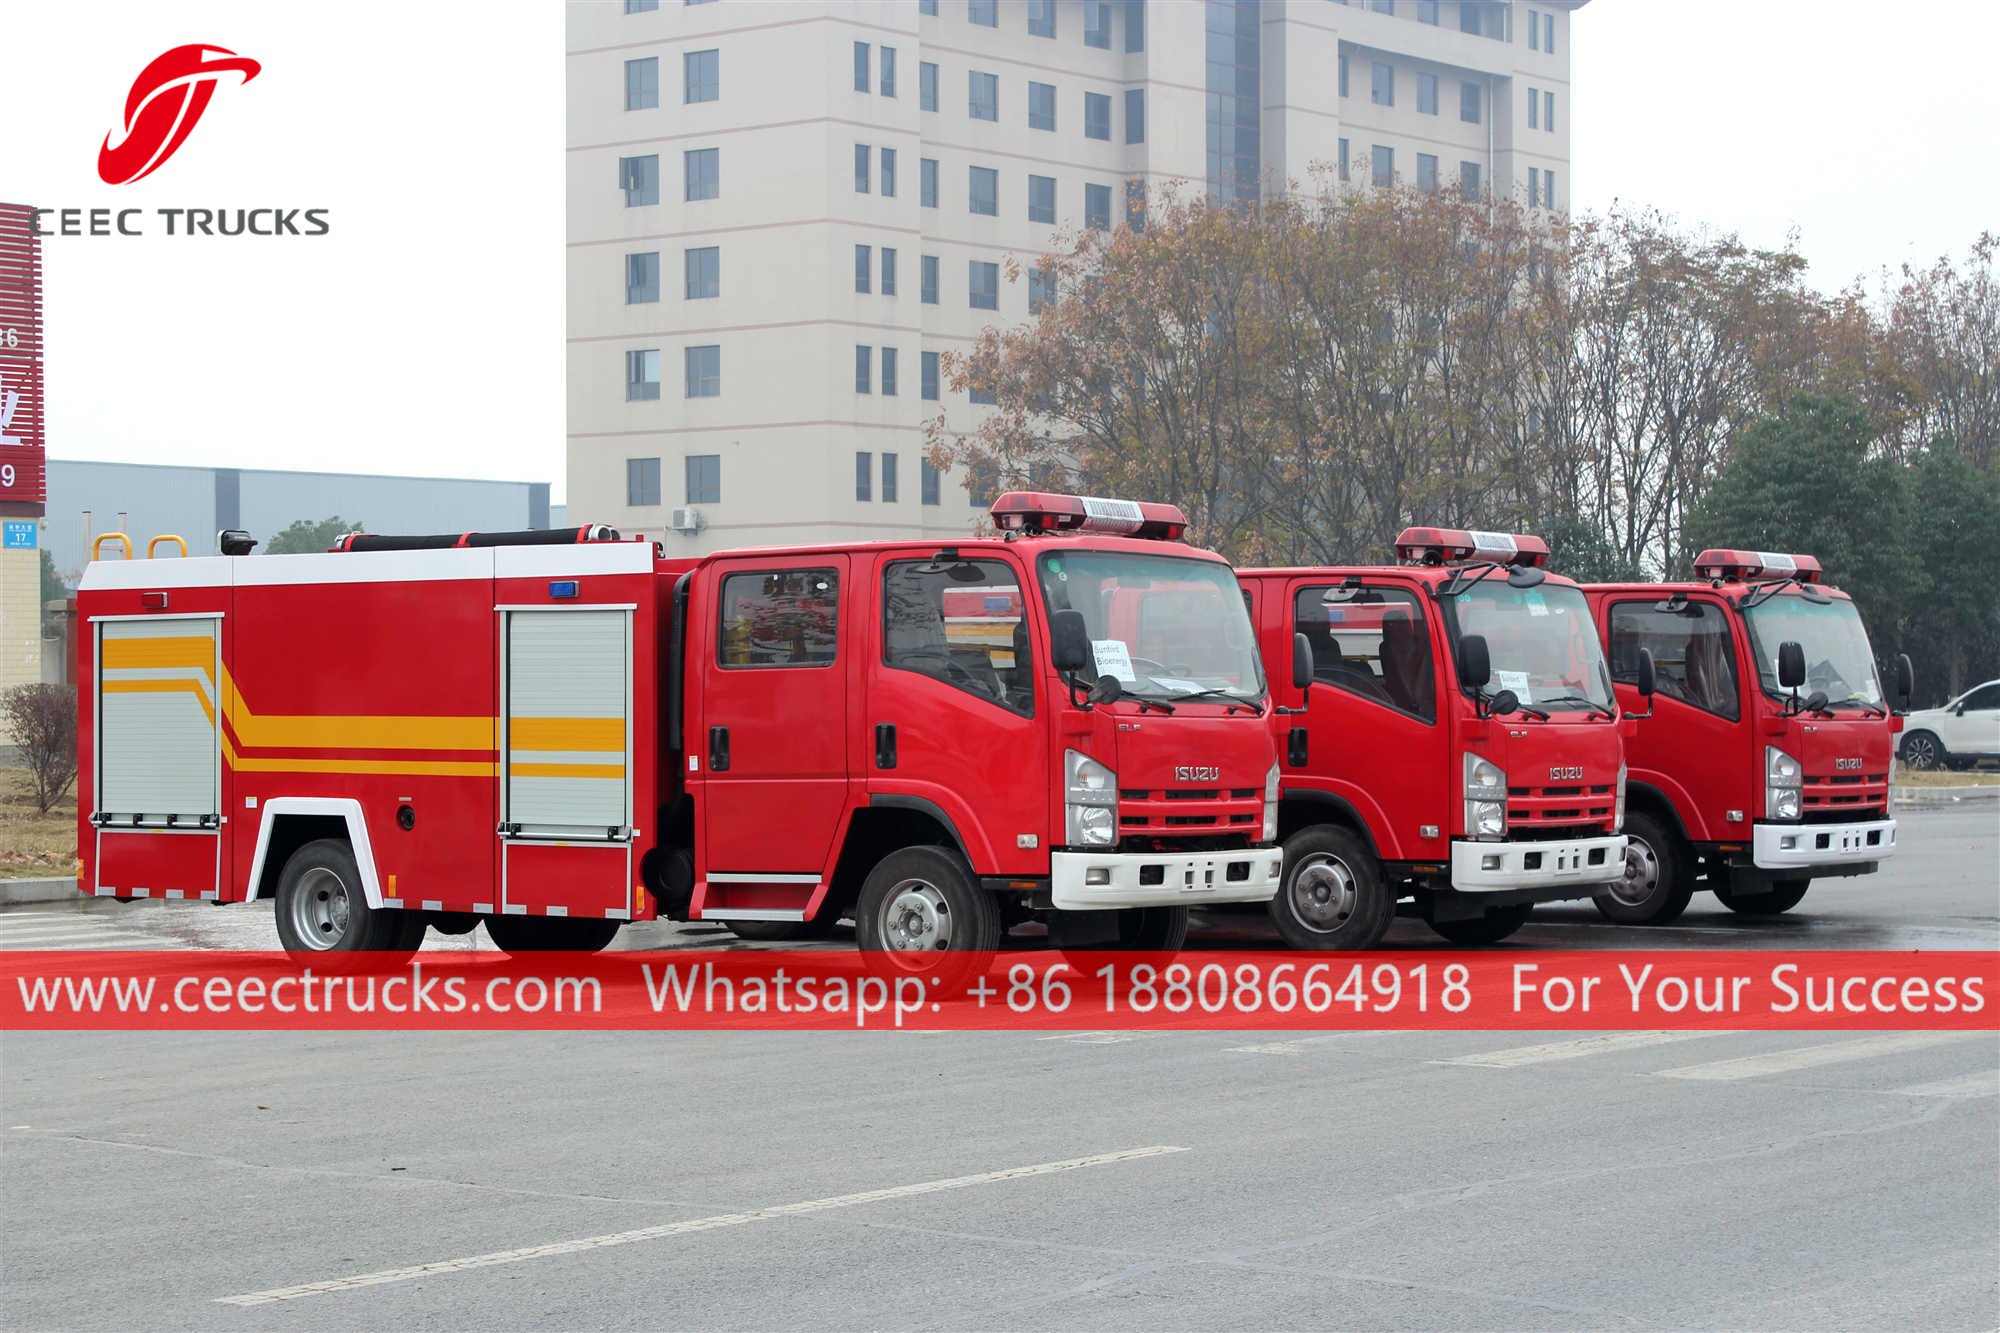 3 units ISUZU Fire rescue trucks were delivered